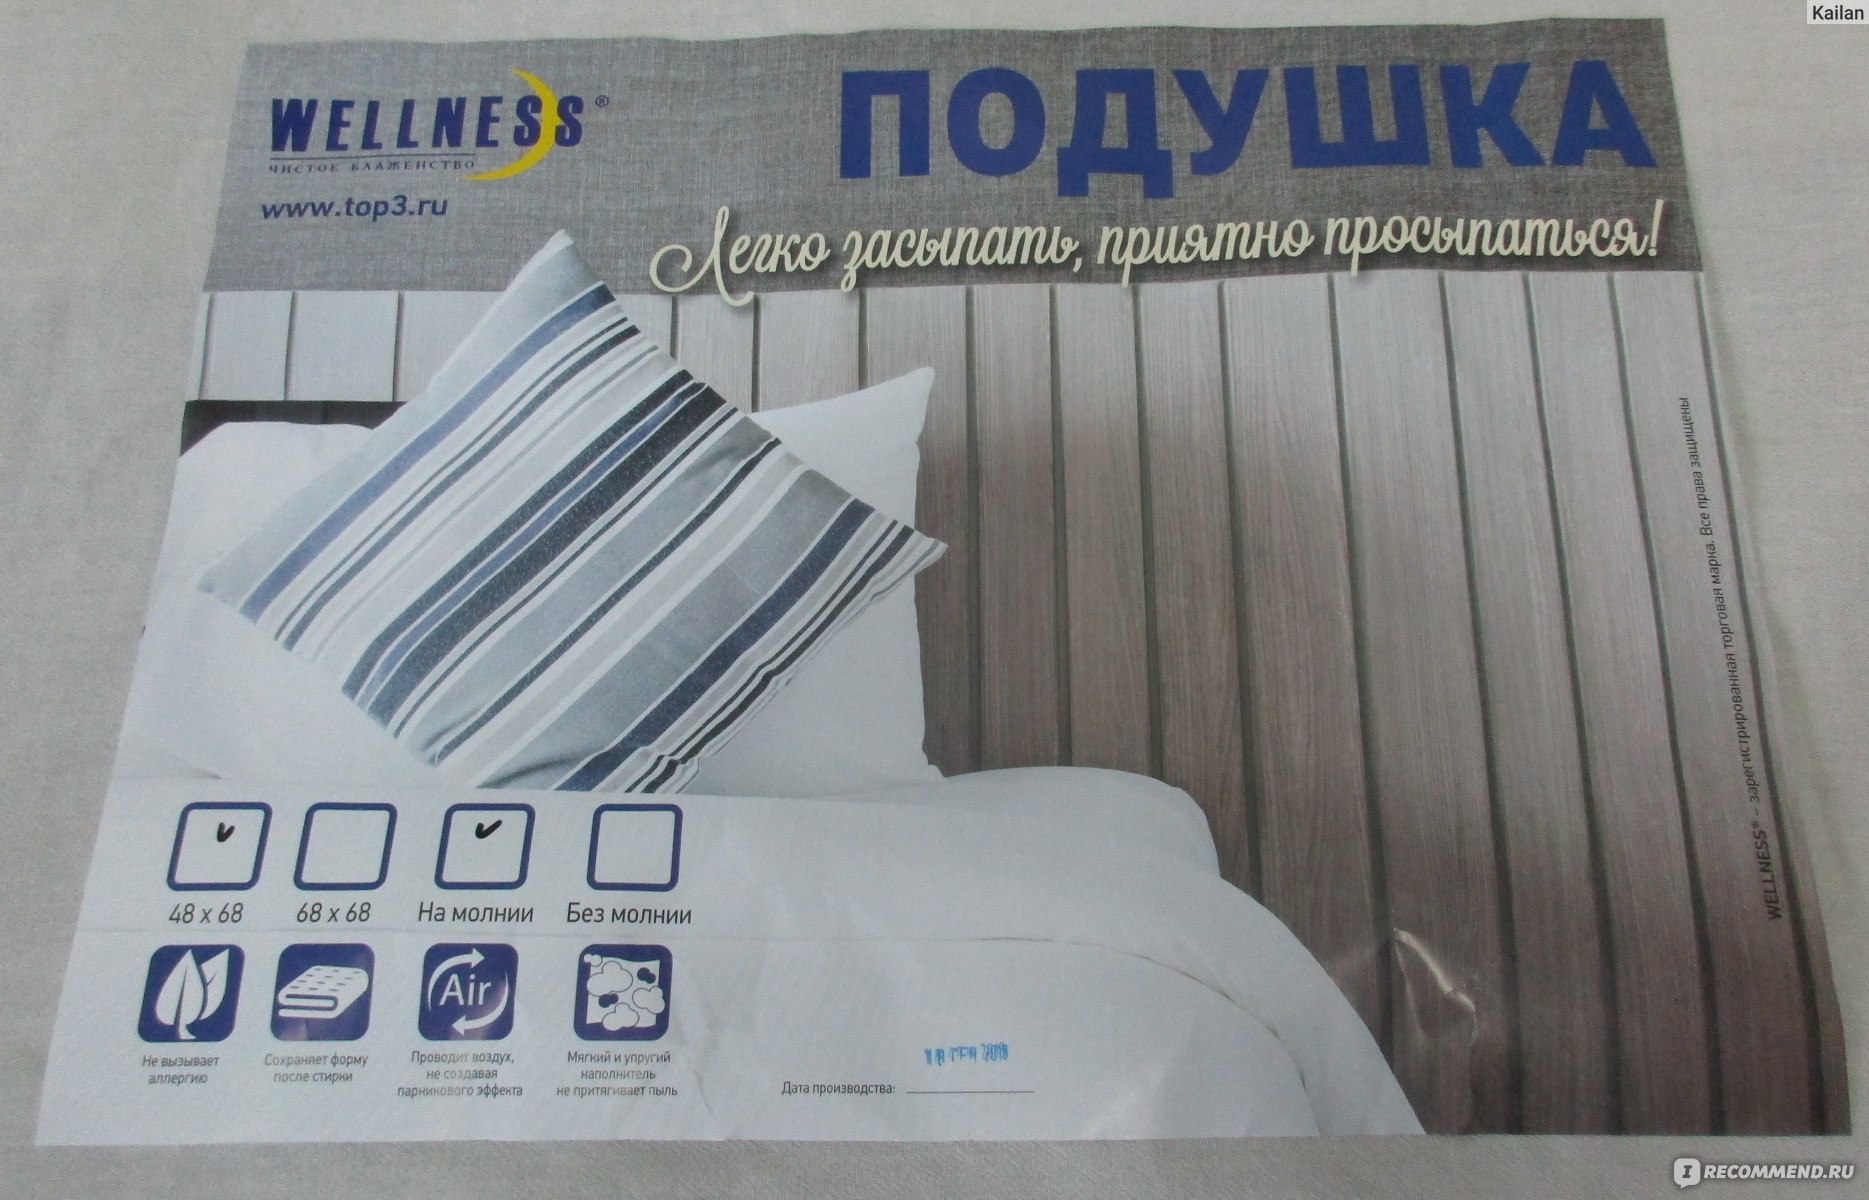 Подушка Wellness термостеганная 48 х 68 см